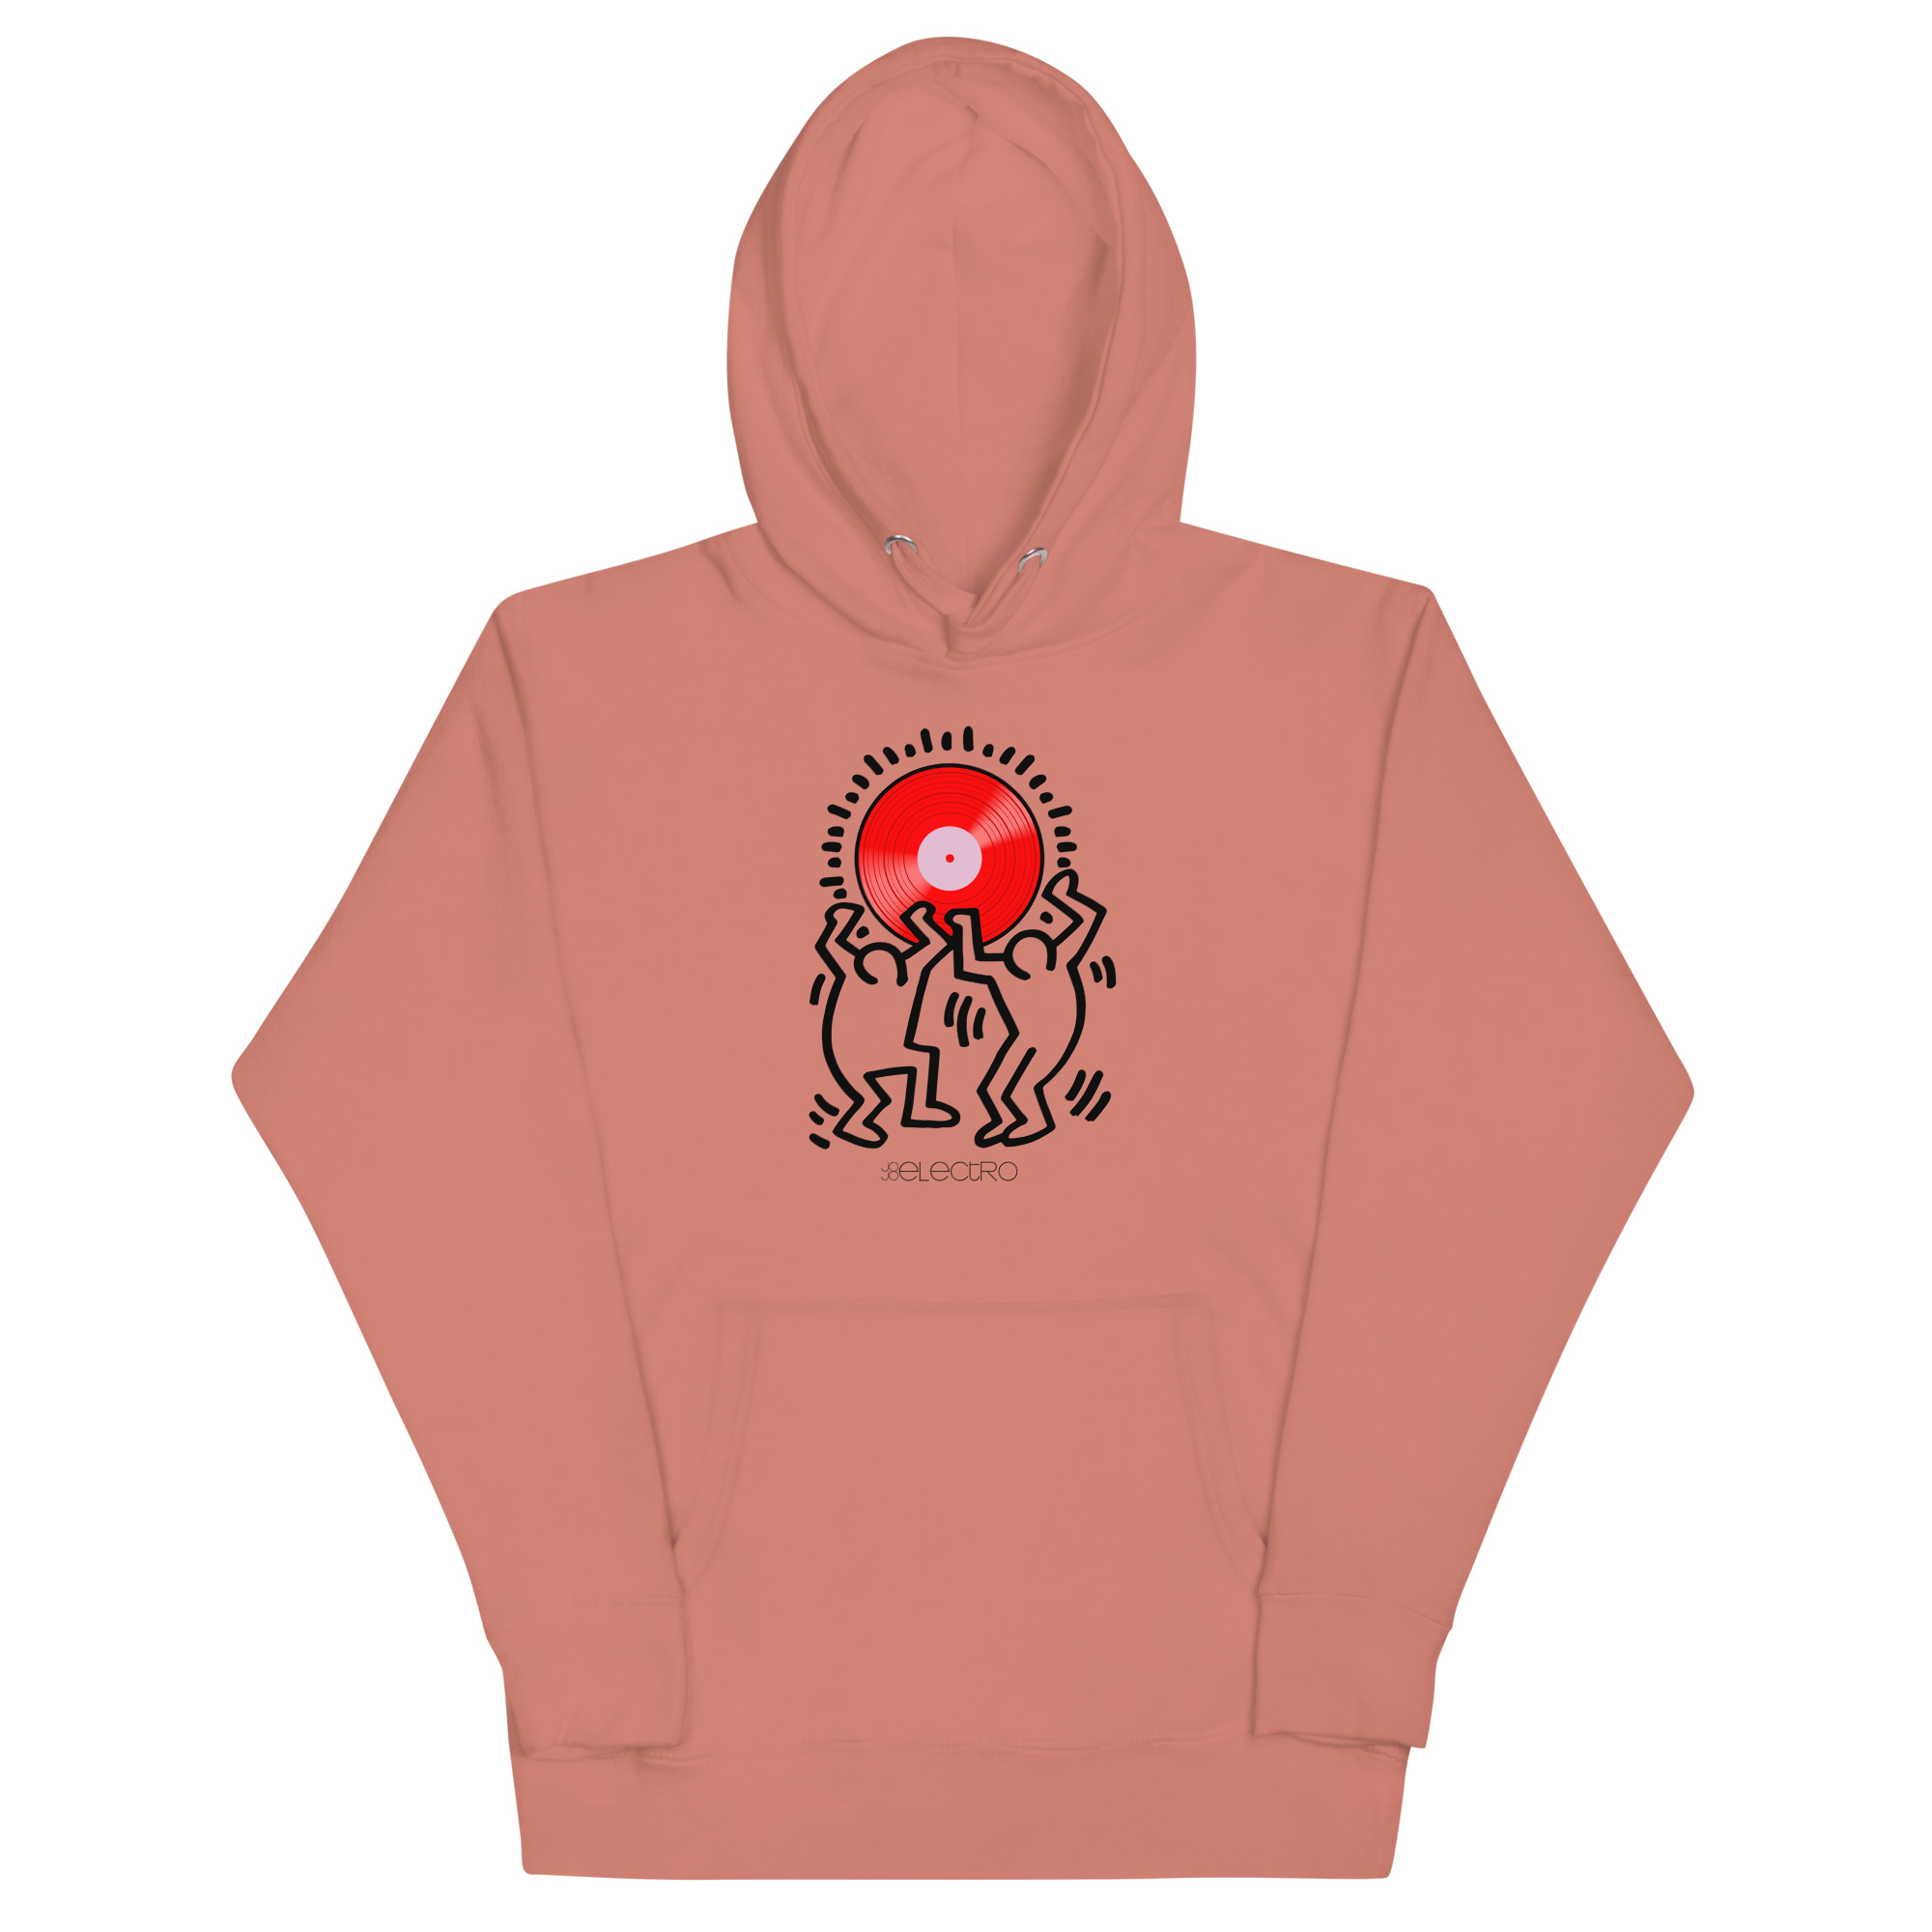 unisex-premium-hoodie-dusty-rose-front-652e1c14be3b5.jpg